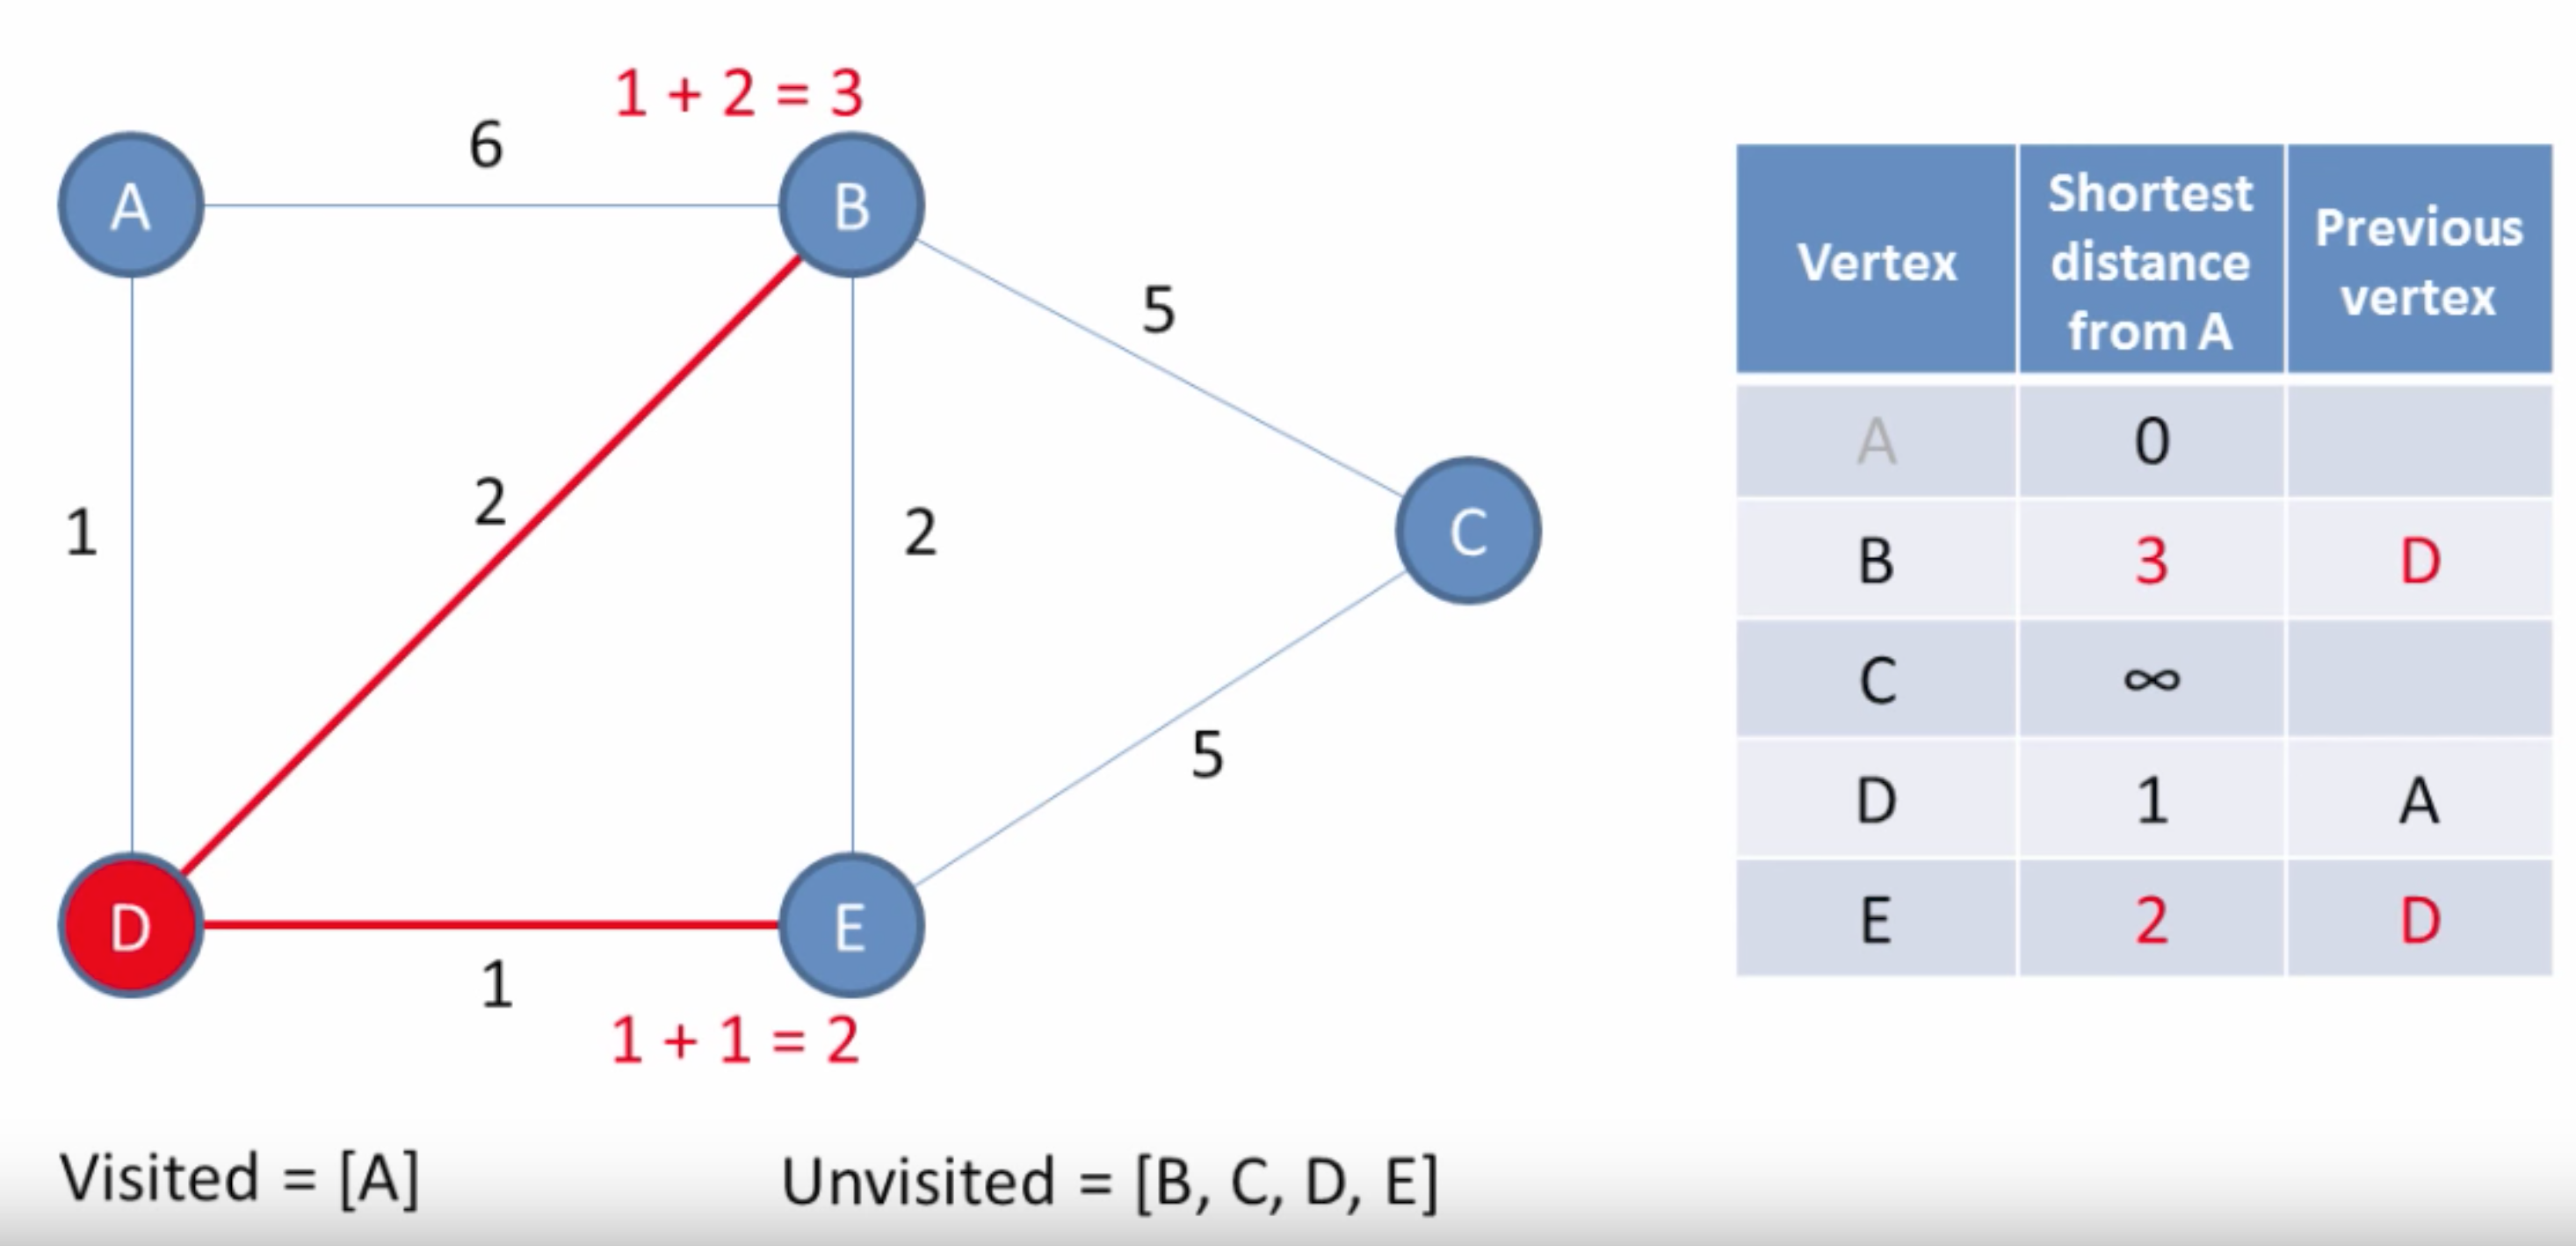 Dijkstra's algorithm stage 2 tracing